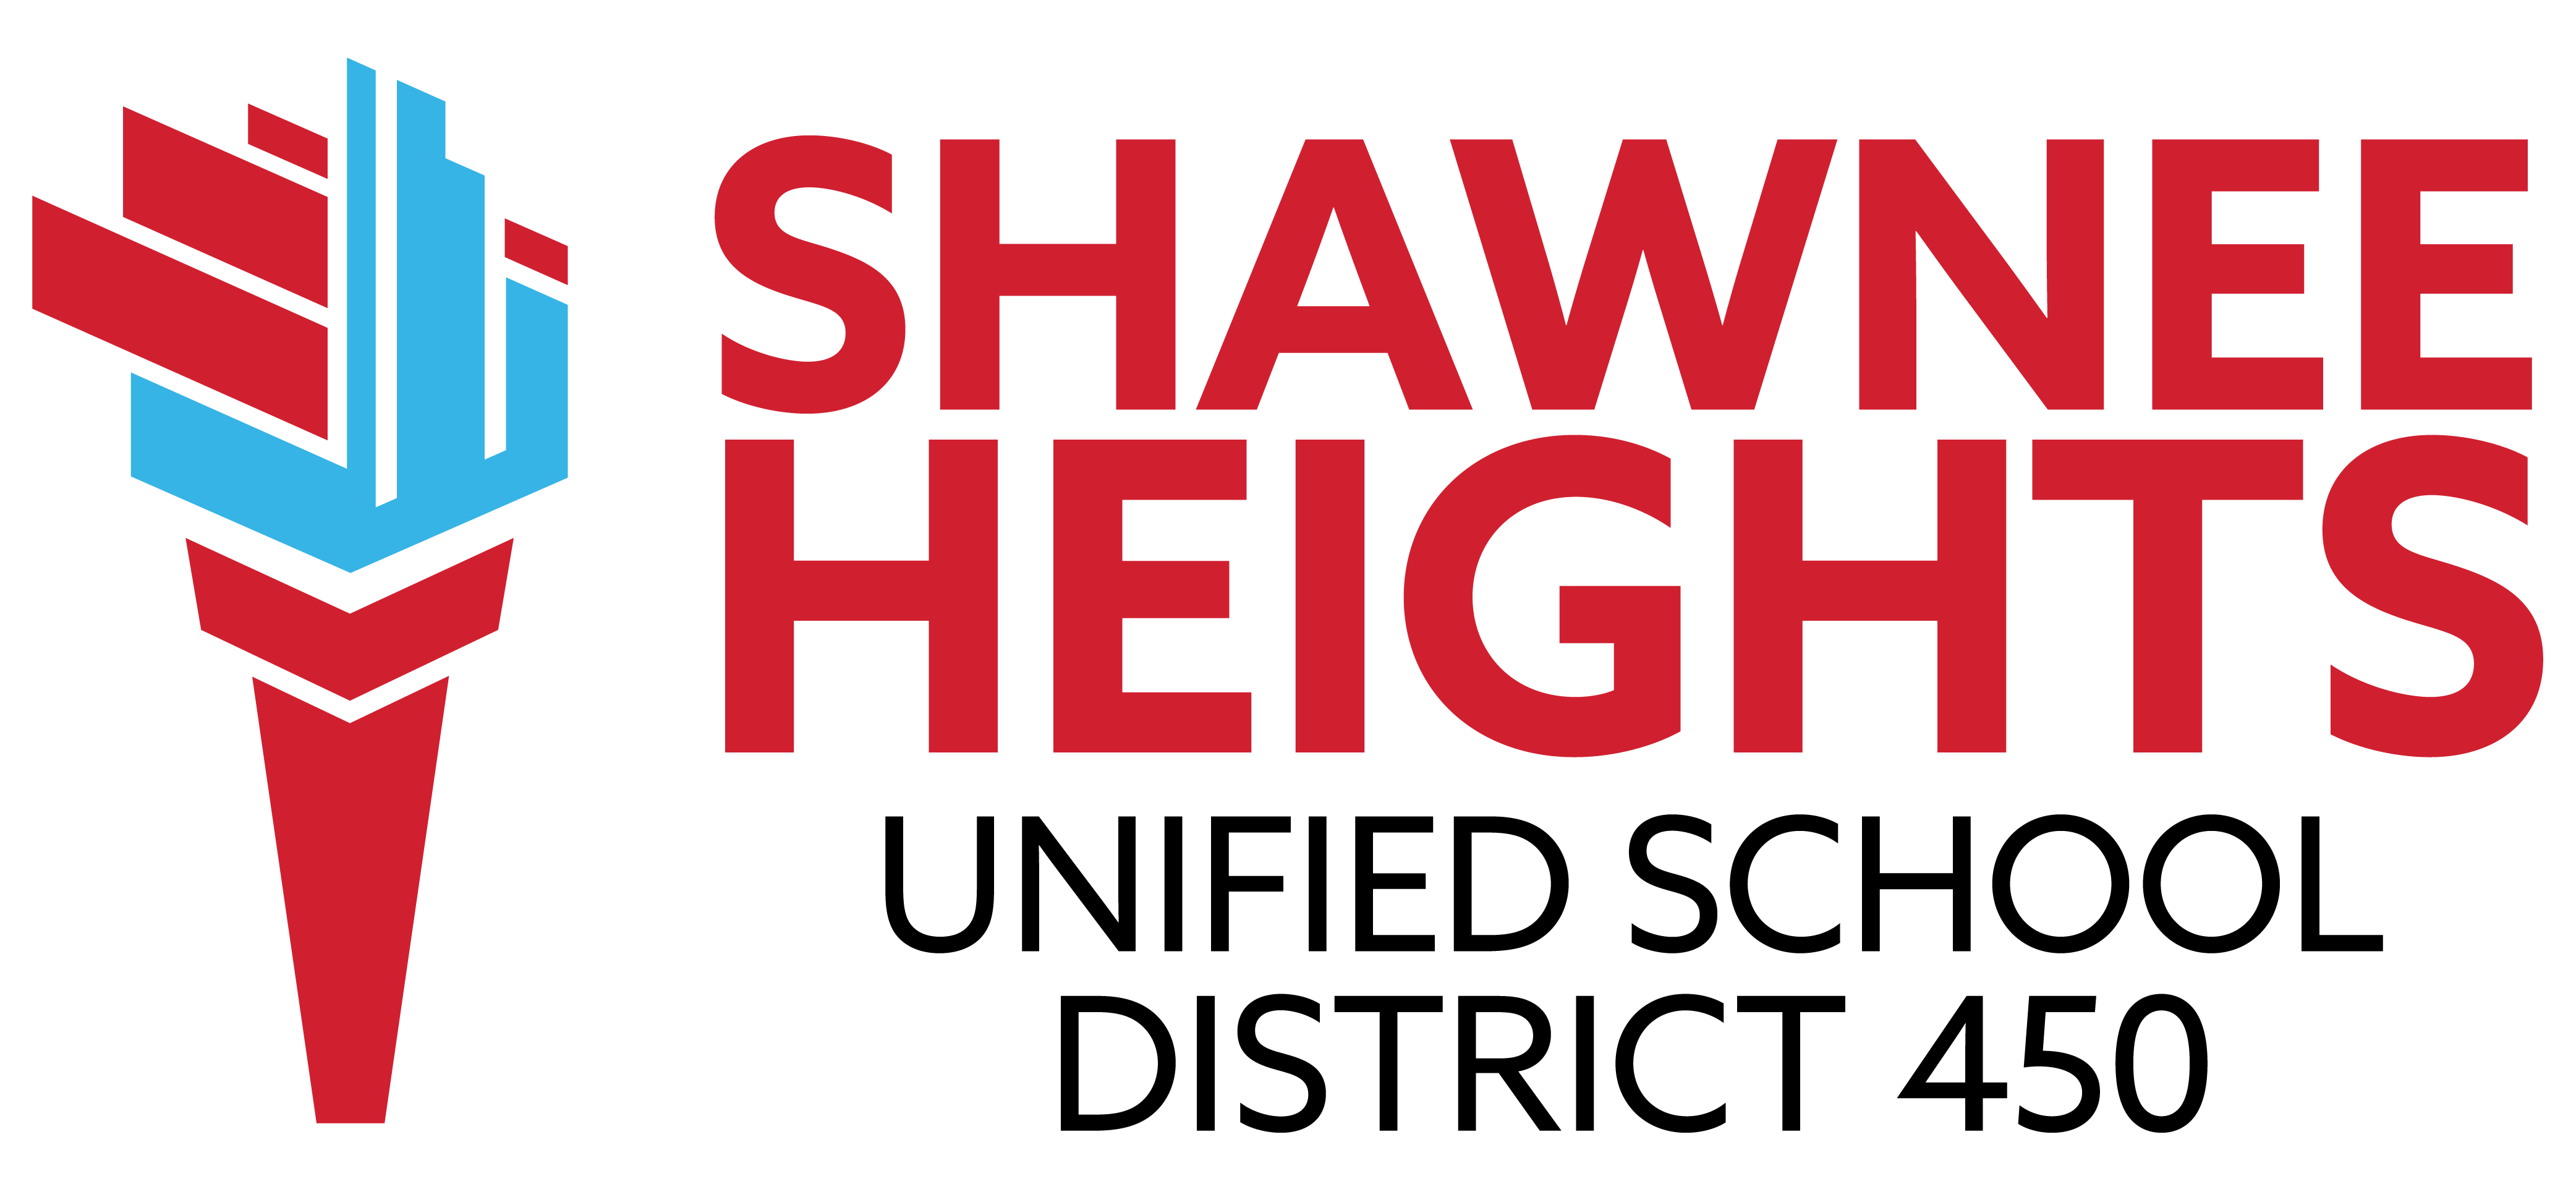 Shawnee Heights Unified School District 450